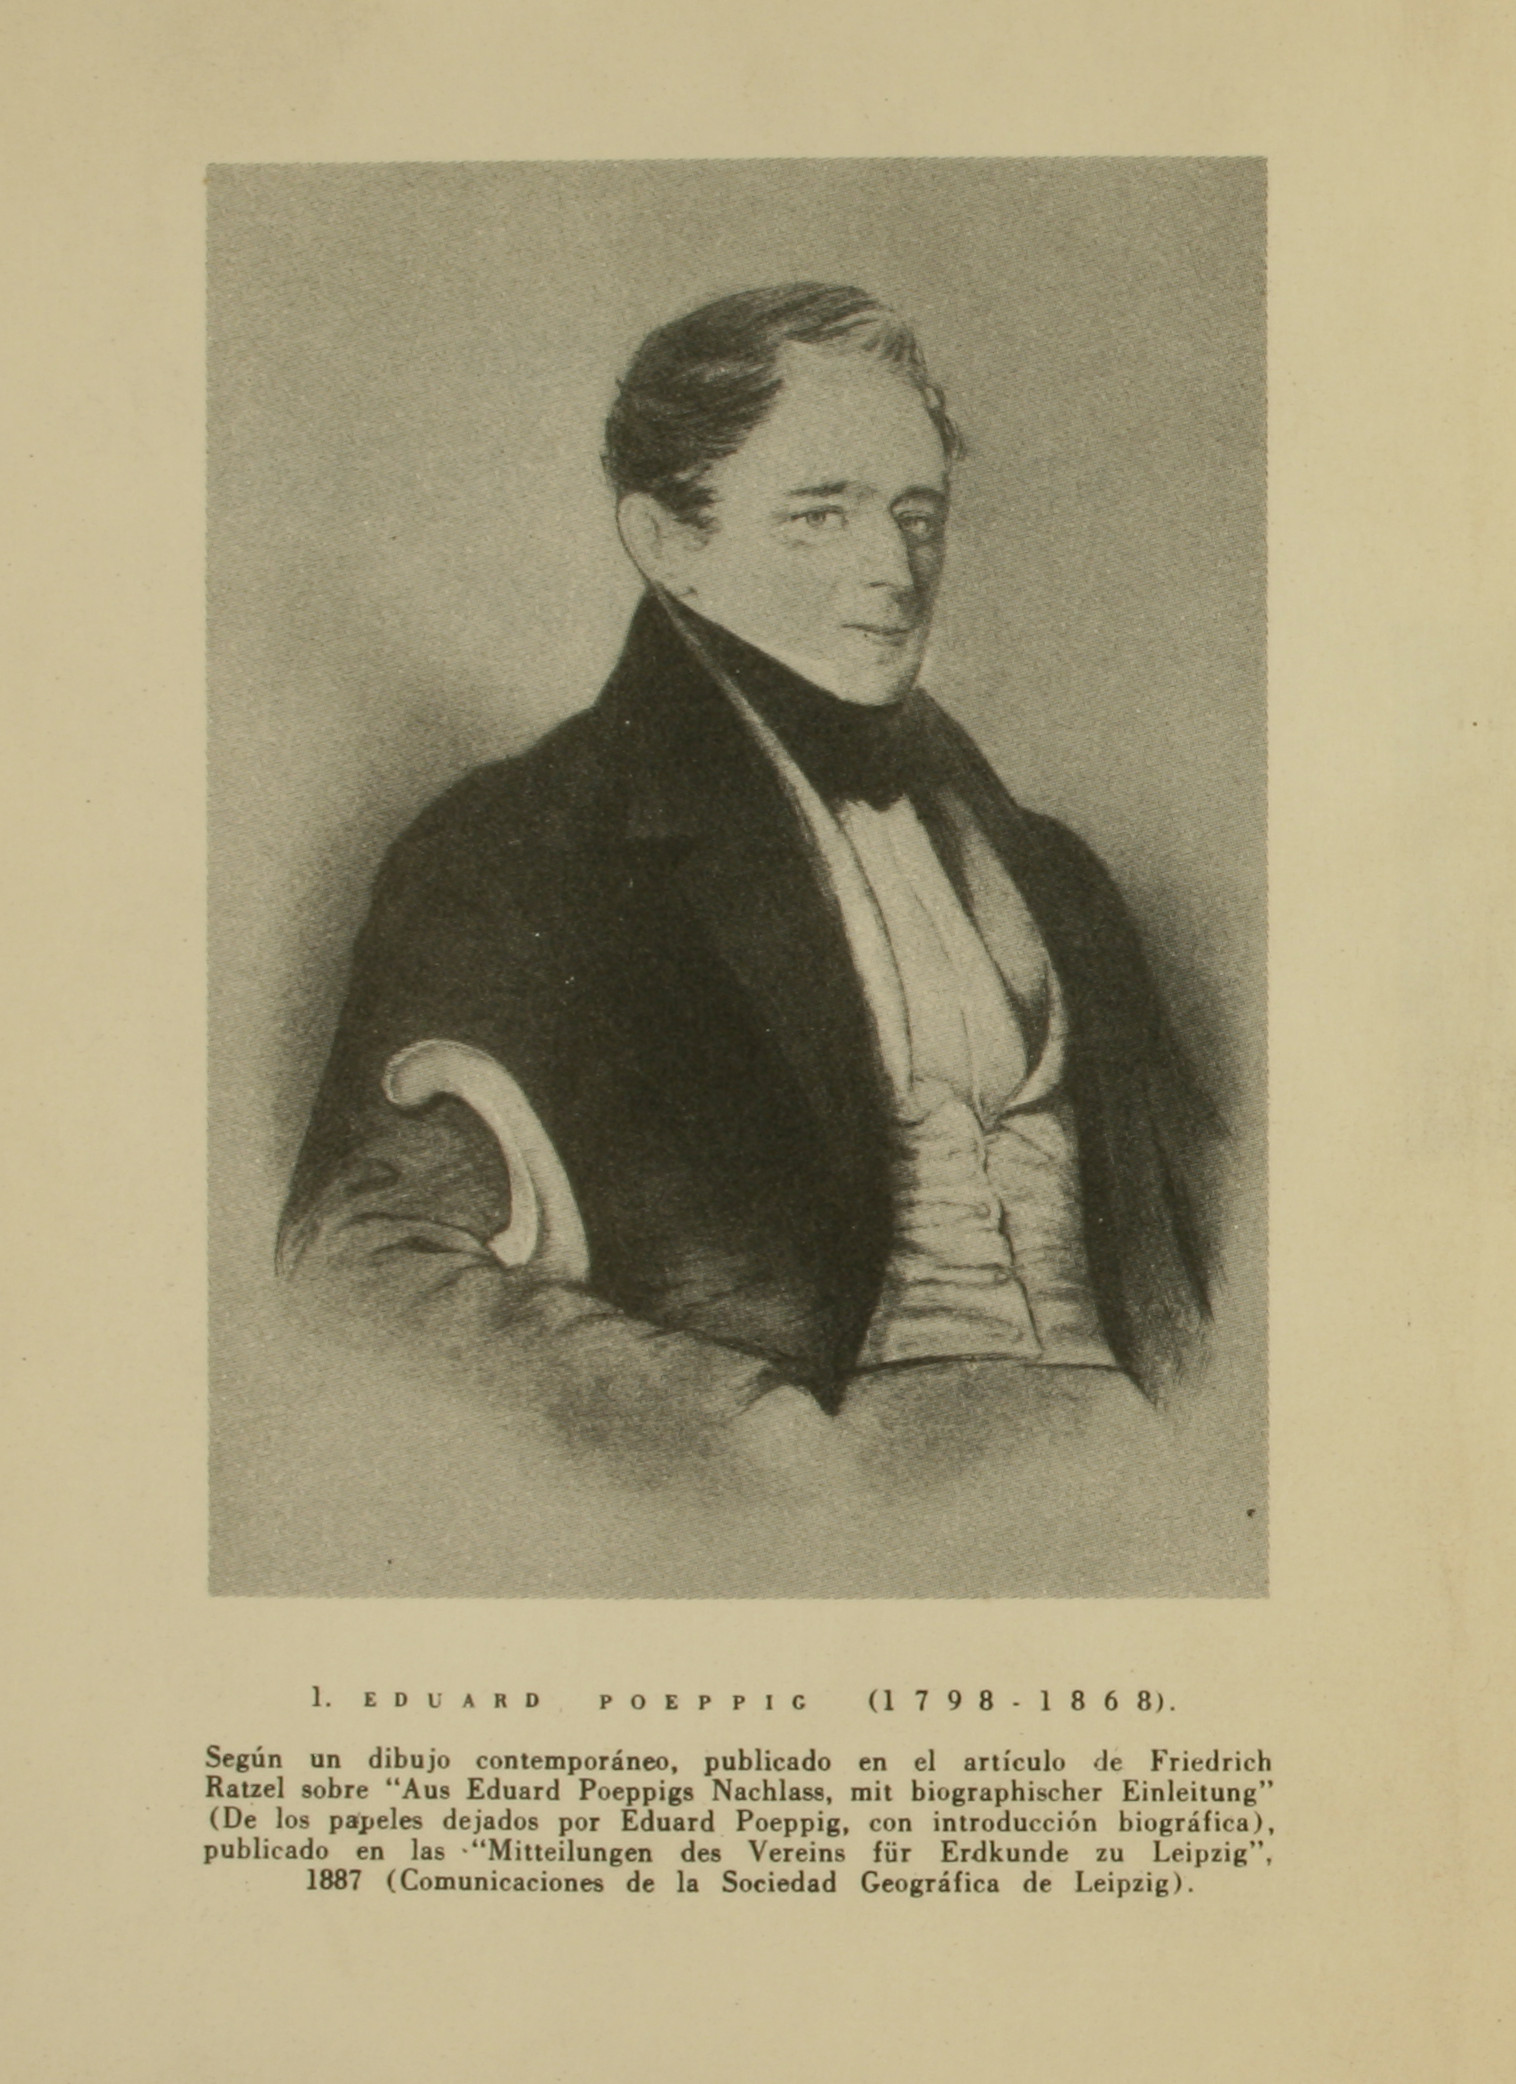 Eduard Poeppig, 1798-1868